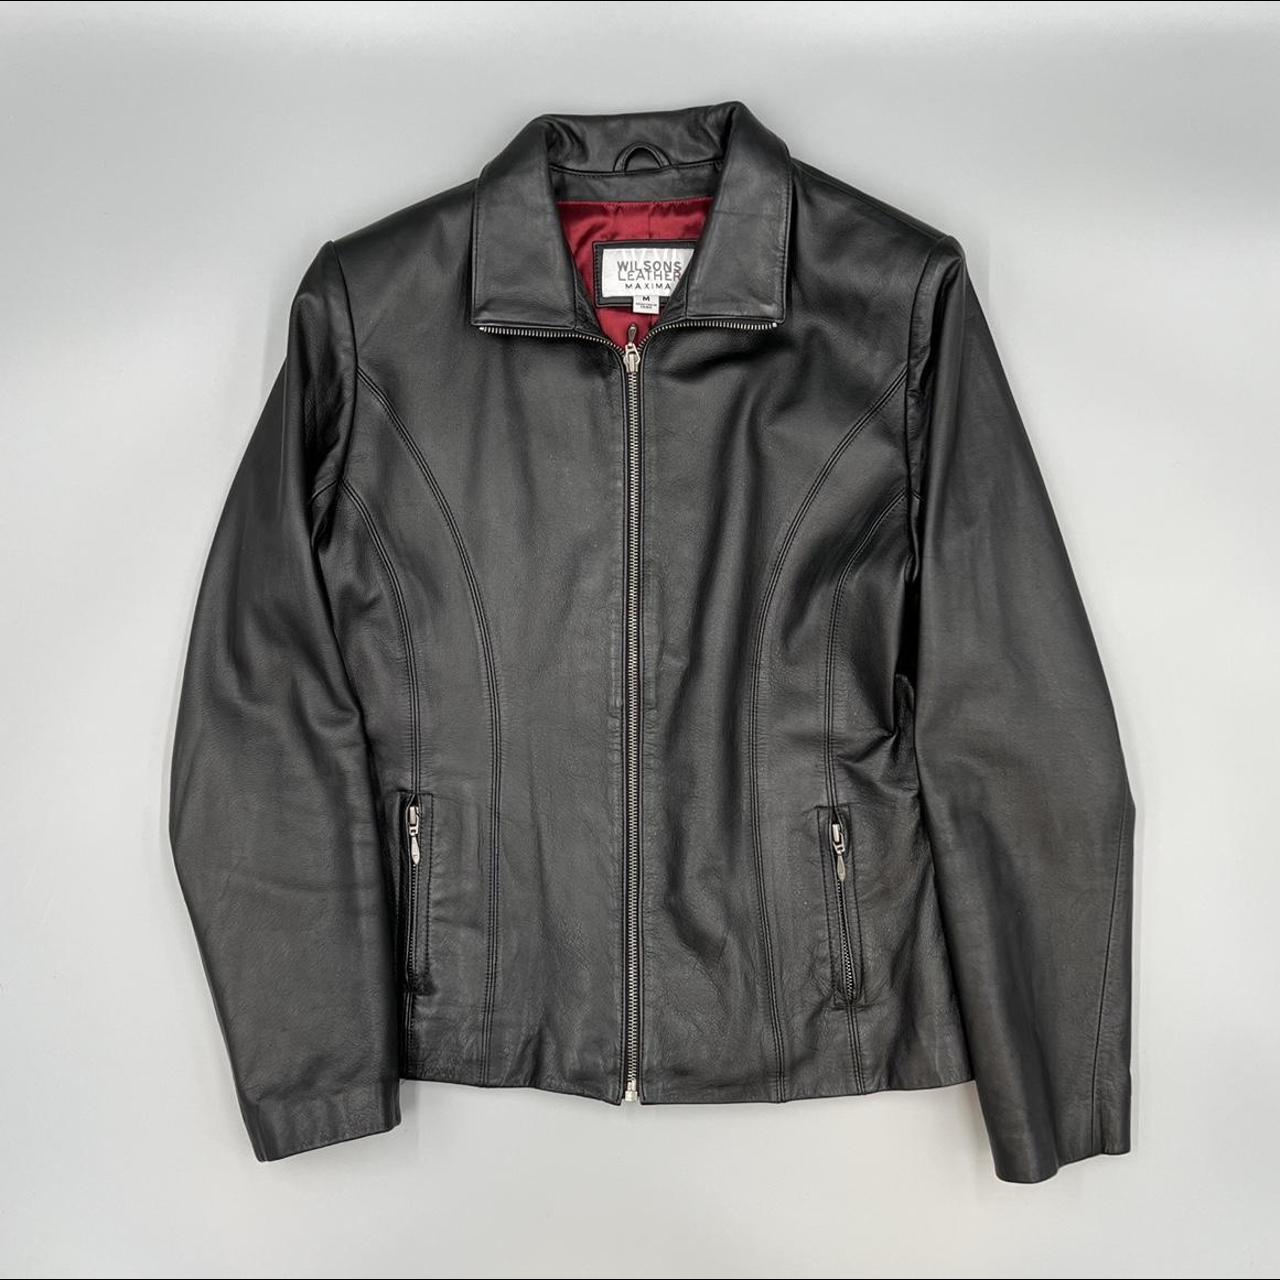 Convertible Collar Black Leather Jacket Brand:... - Depop